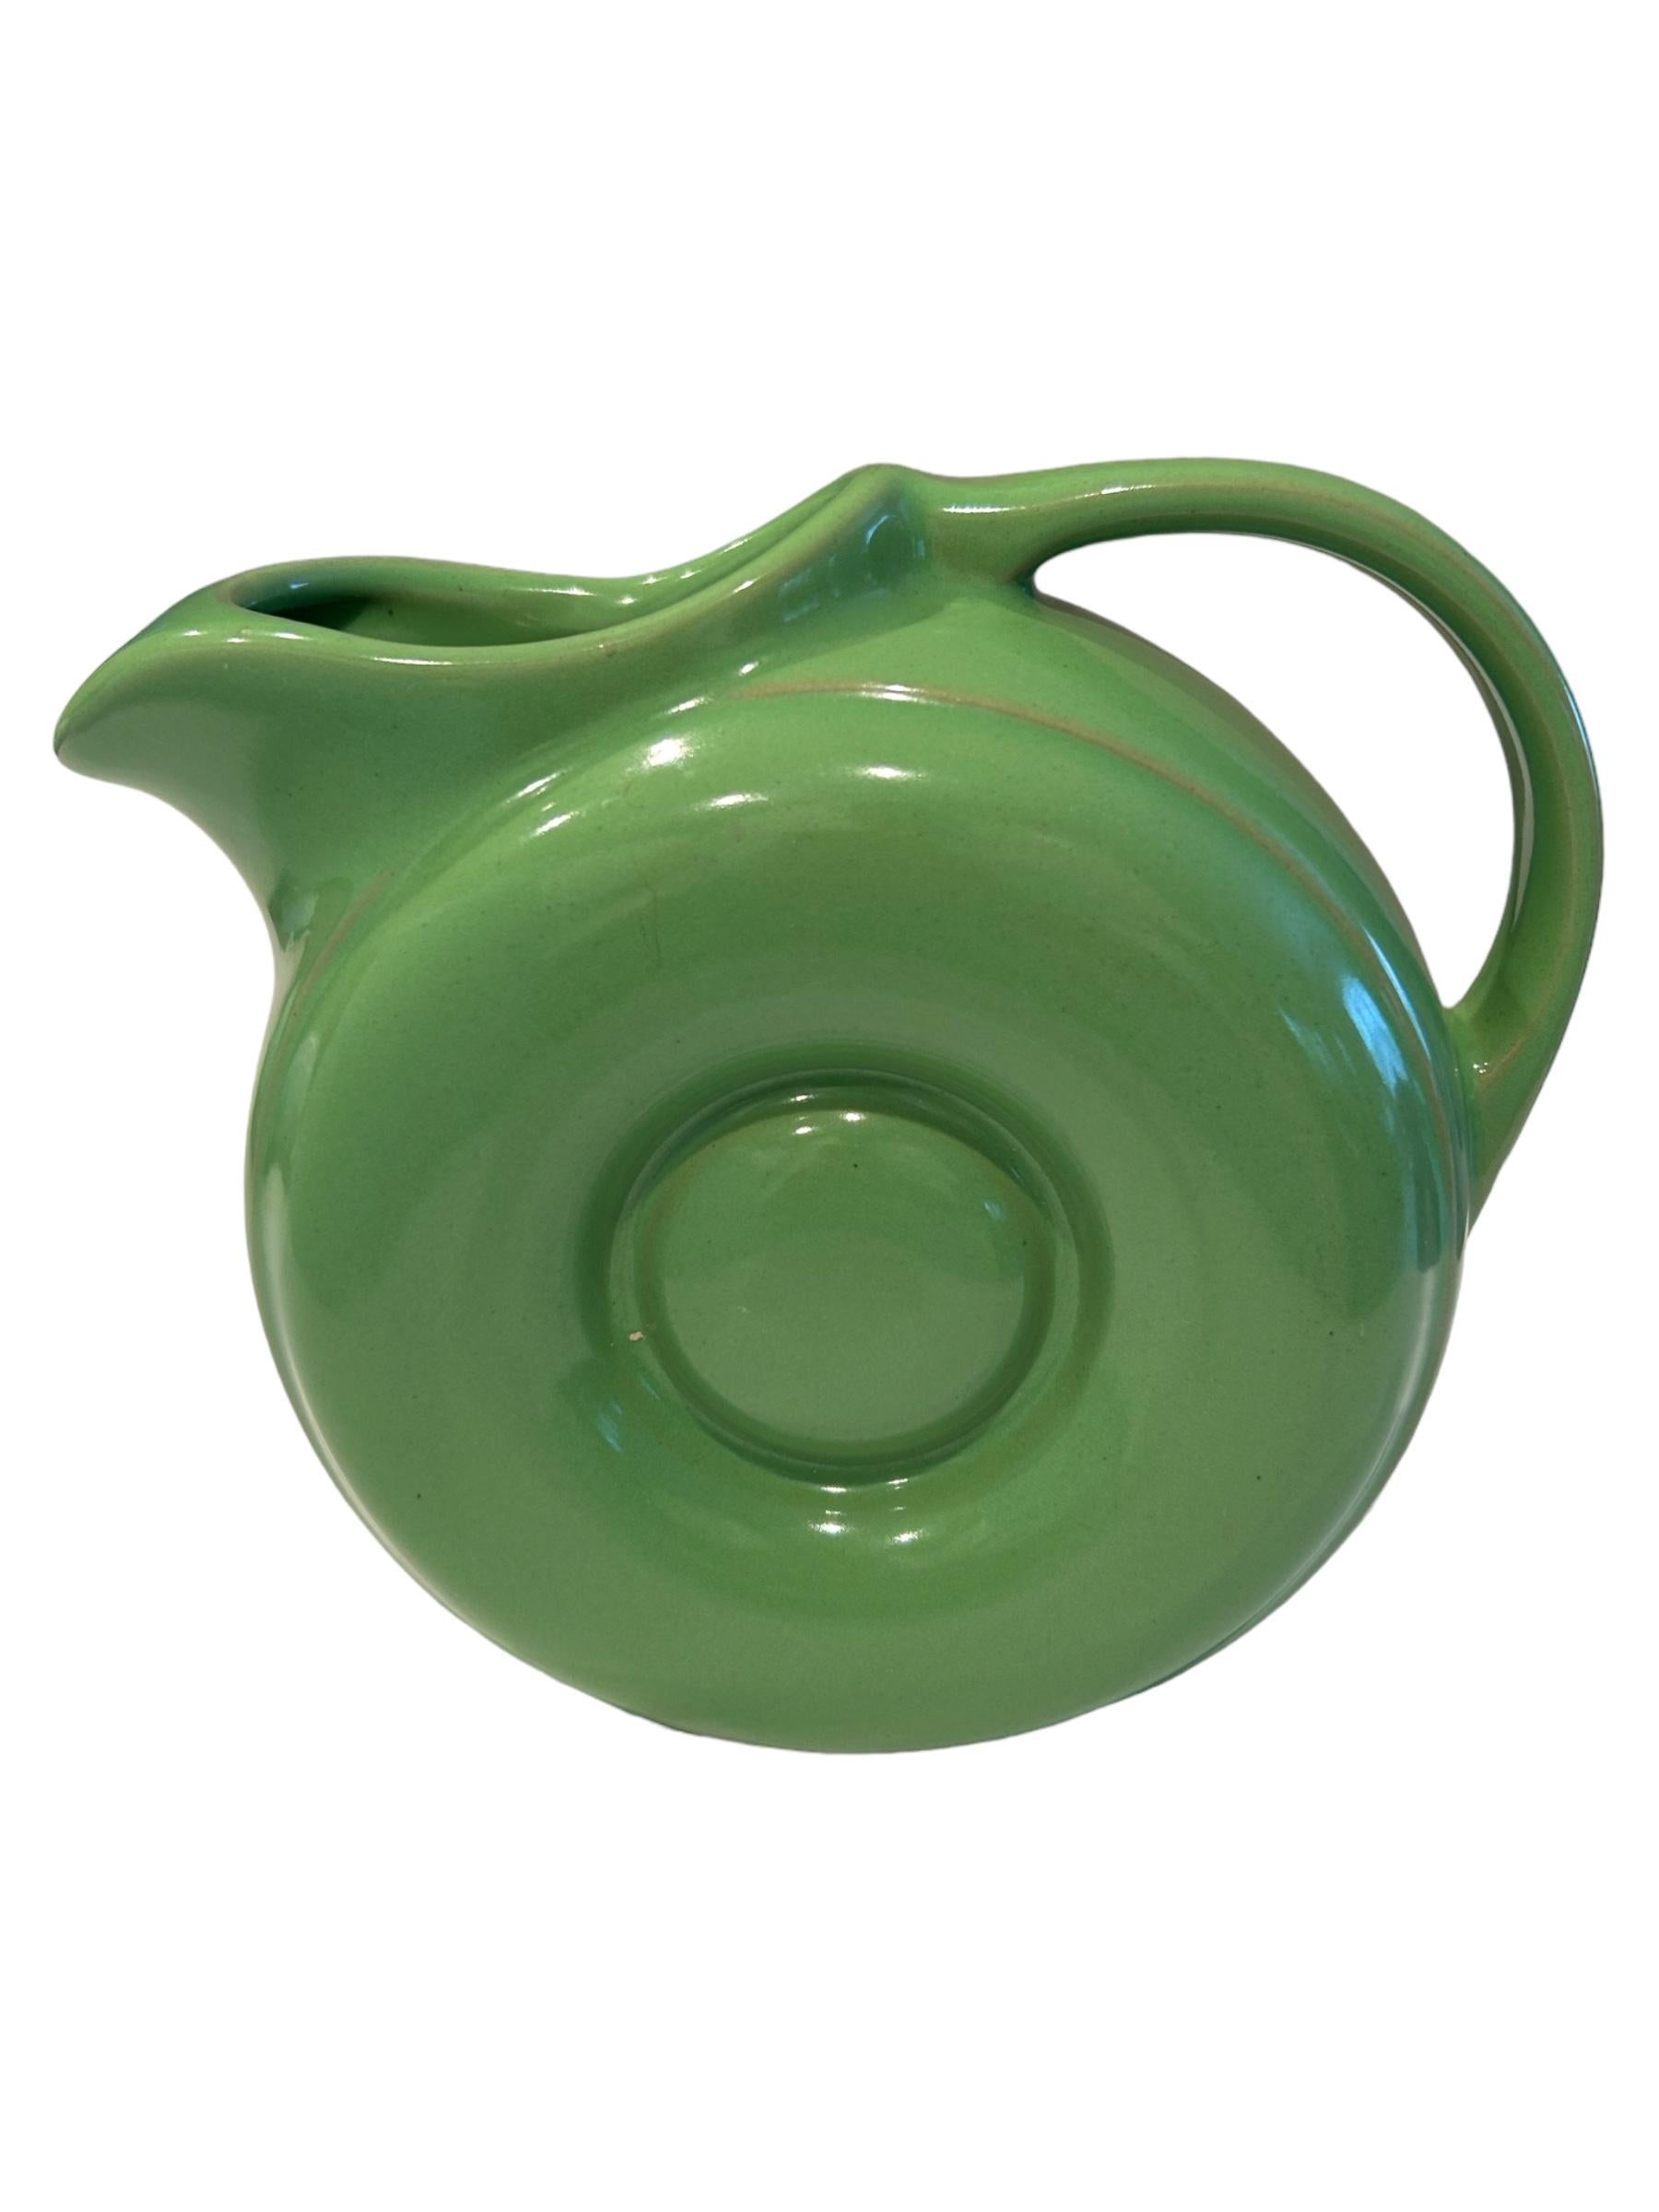 hall pottery pitcher value